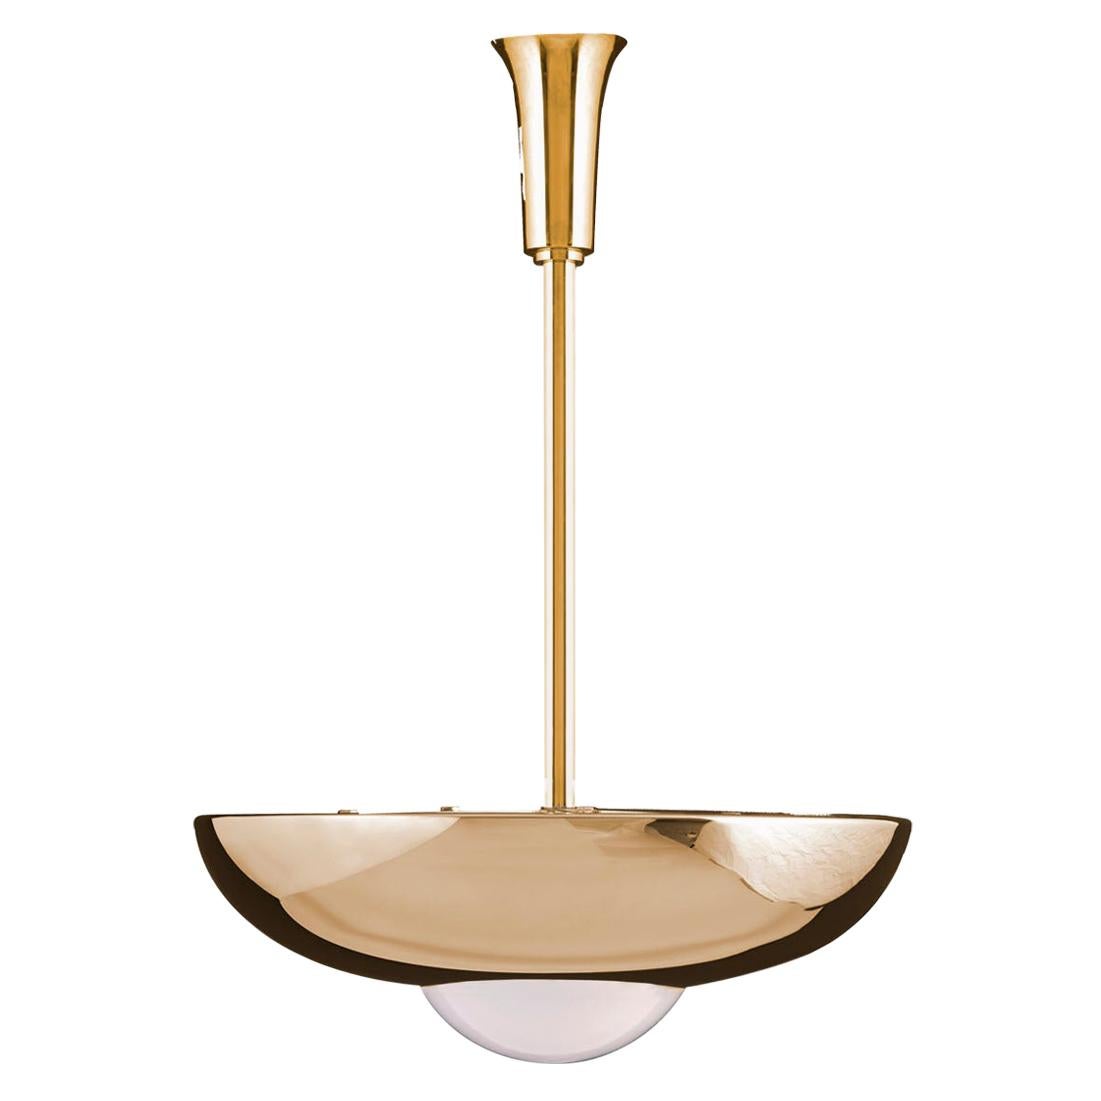 Bauhaus Art Deco Style Pendant Lamp "Zwadela" Chandelier Pendant, Re-Edition